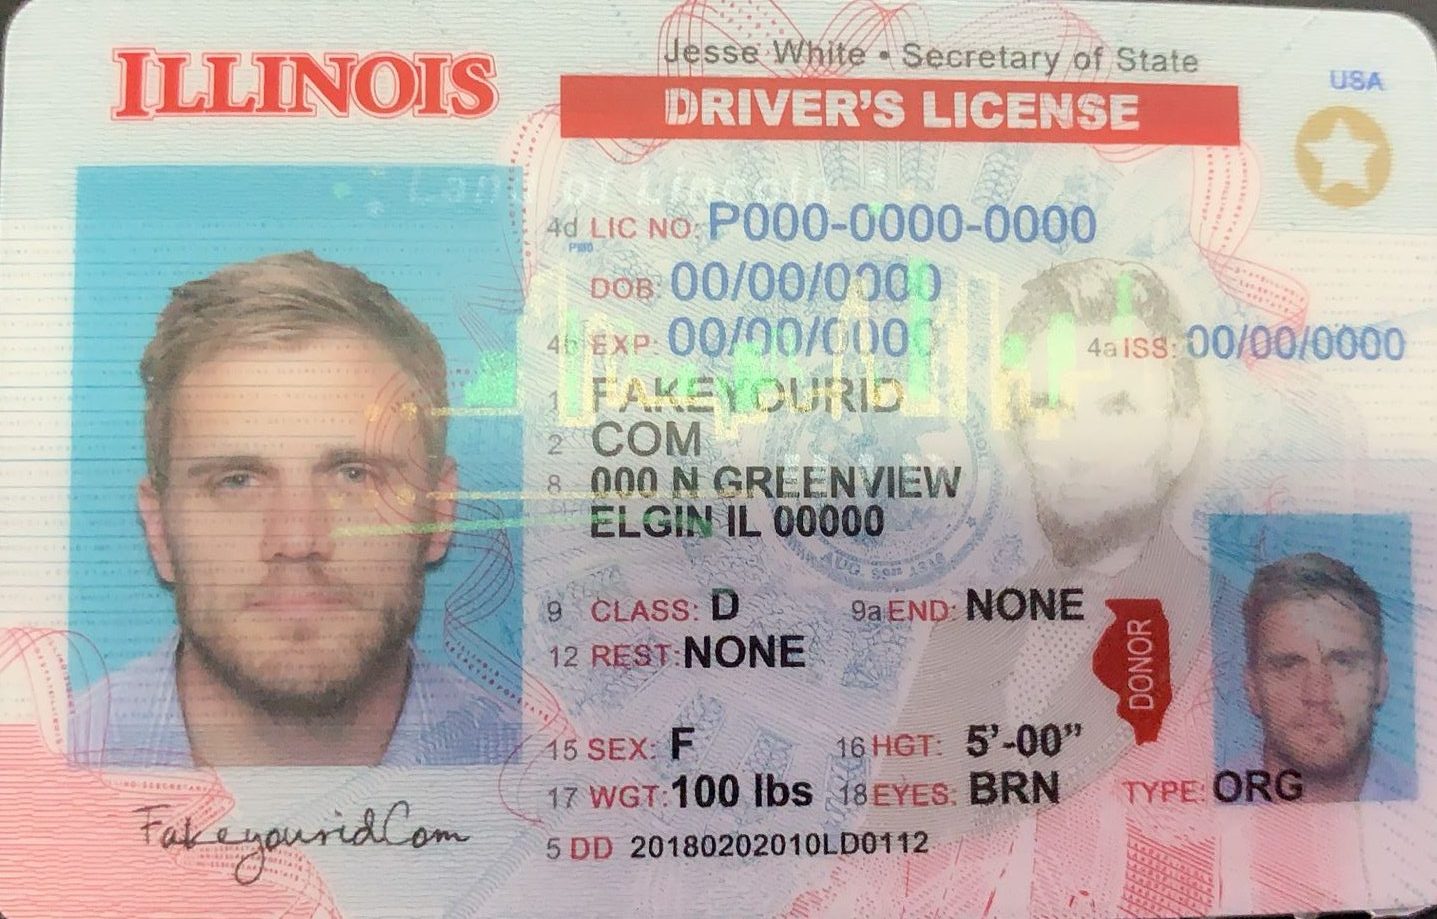 Illinois - Buy Scannable Fake ID - We Make Premium Fake IDs